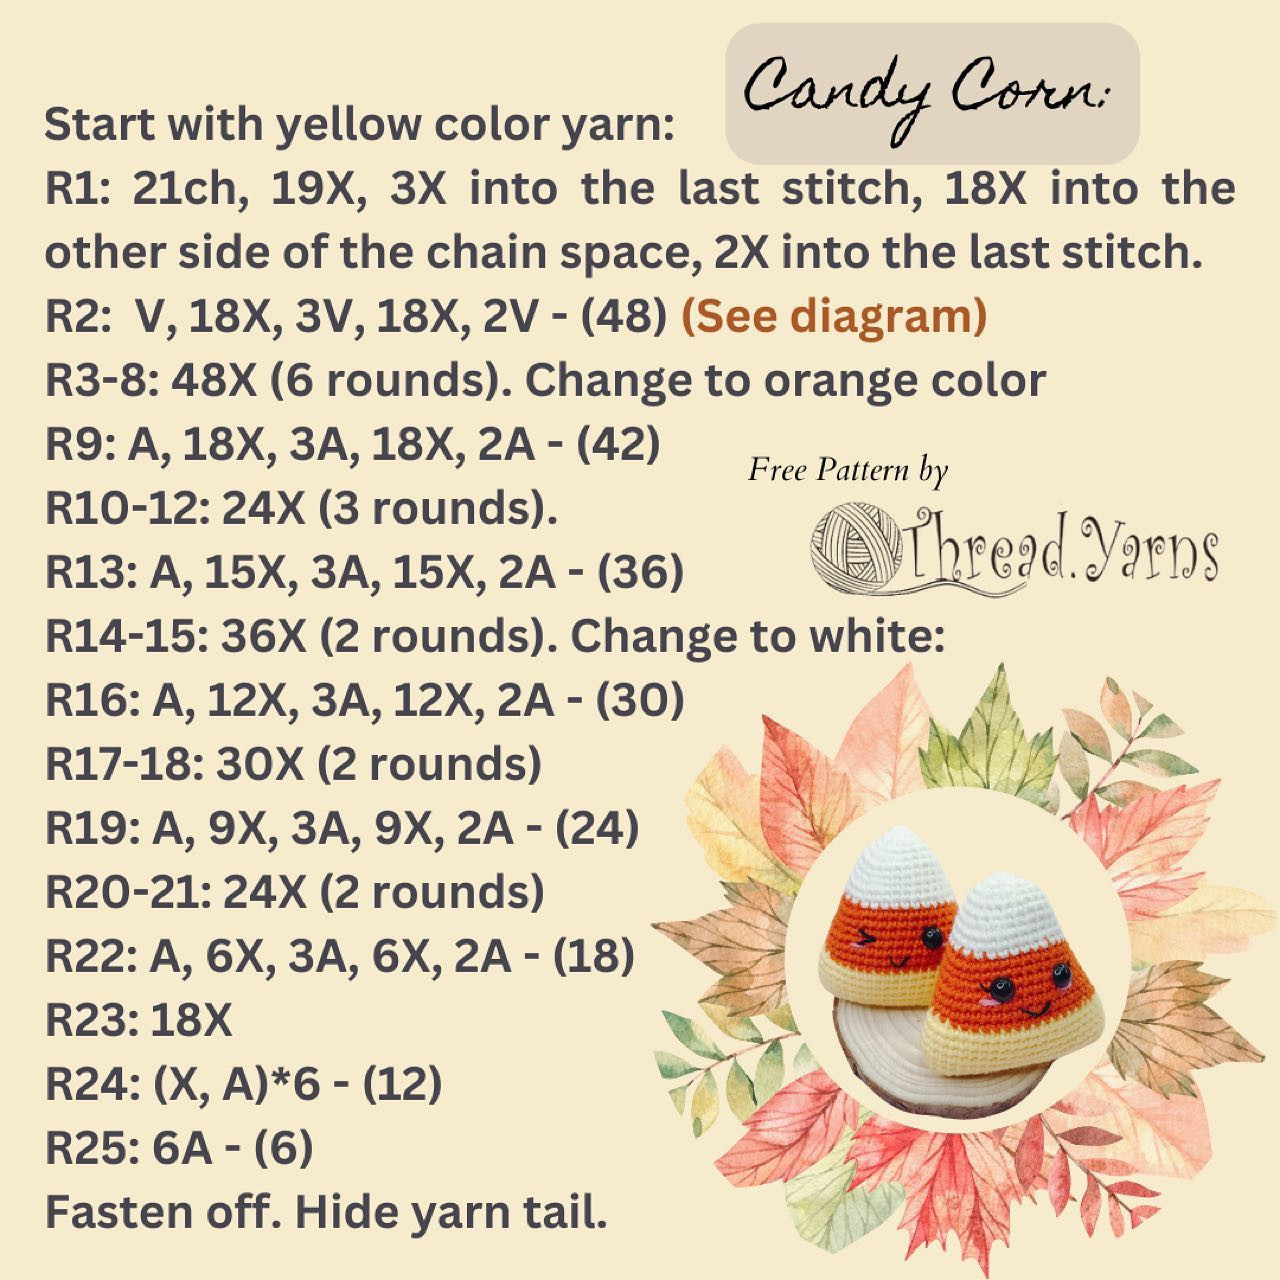 Candy corn crochet pattern